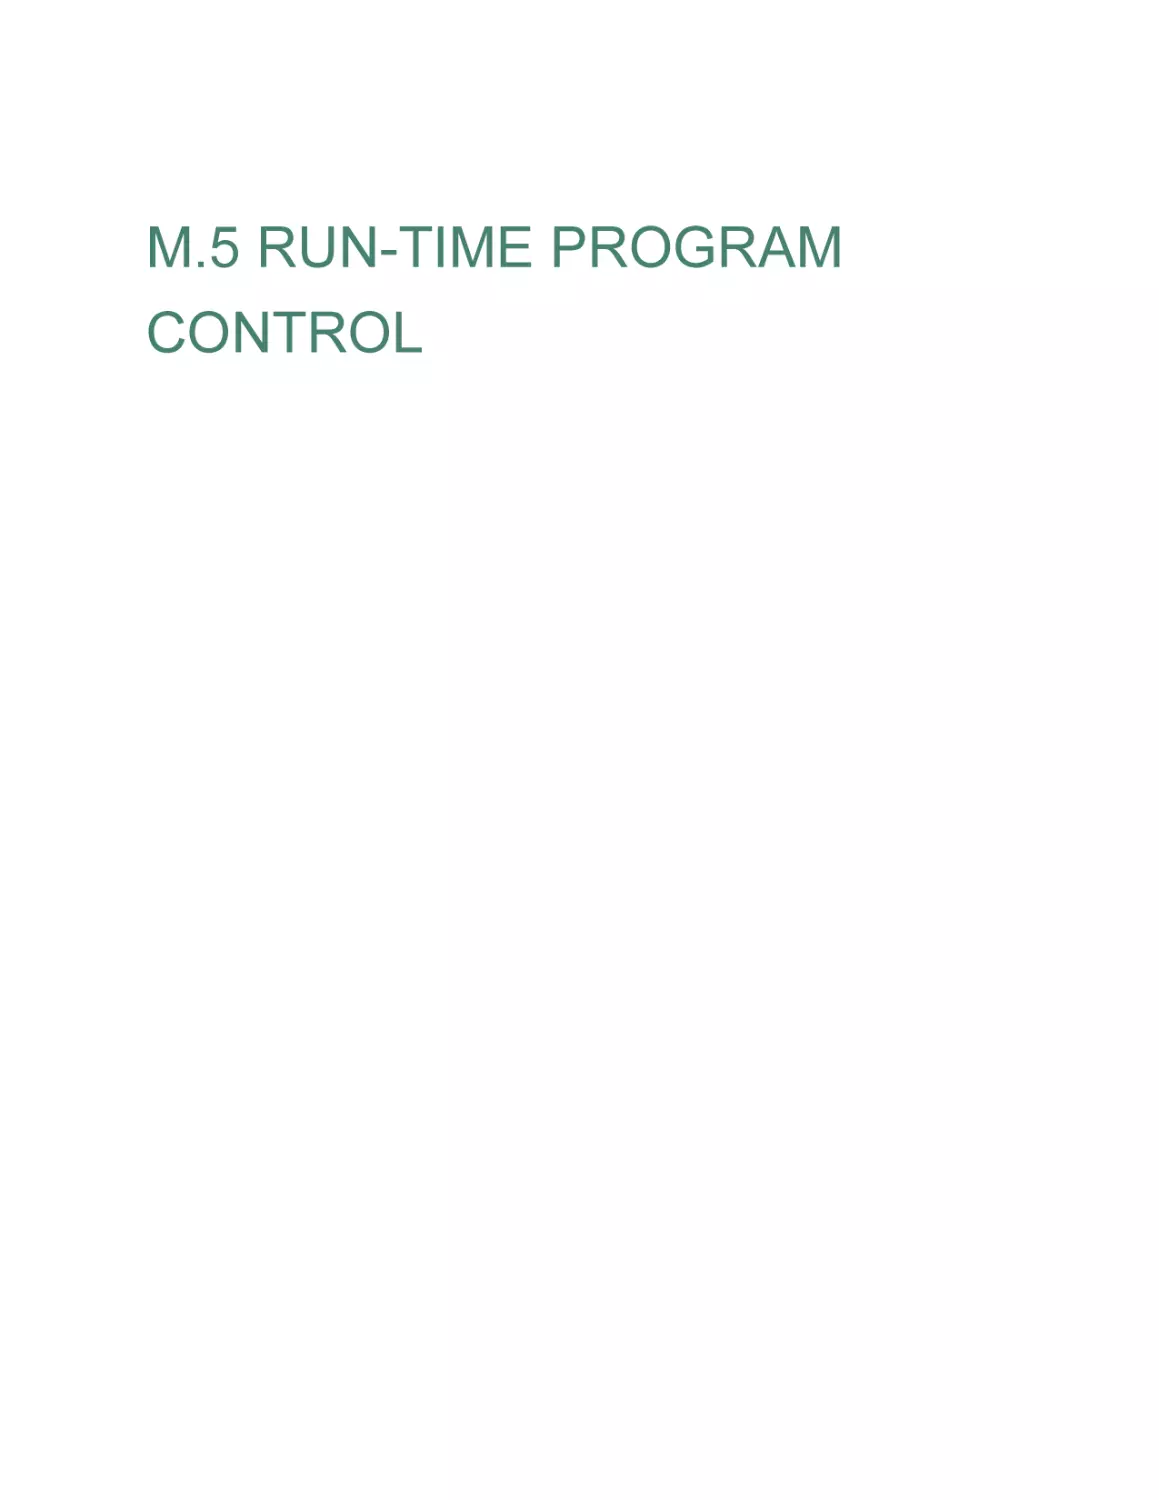 M.5 RUN-TIME PROGRAM CONTROL